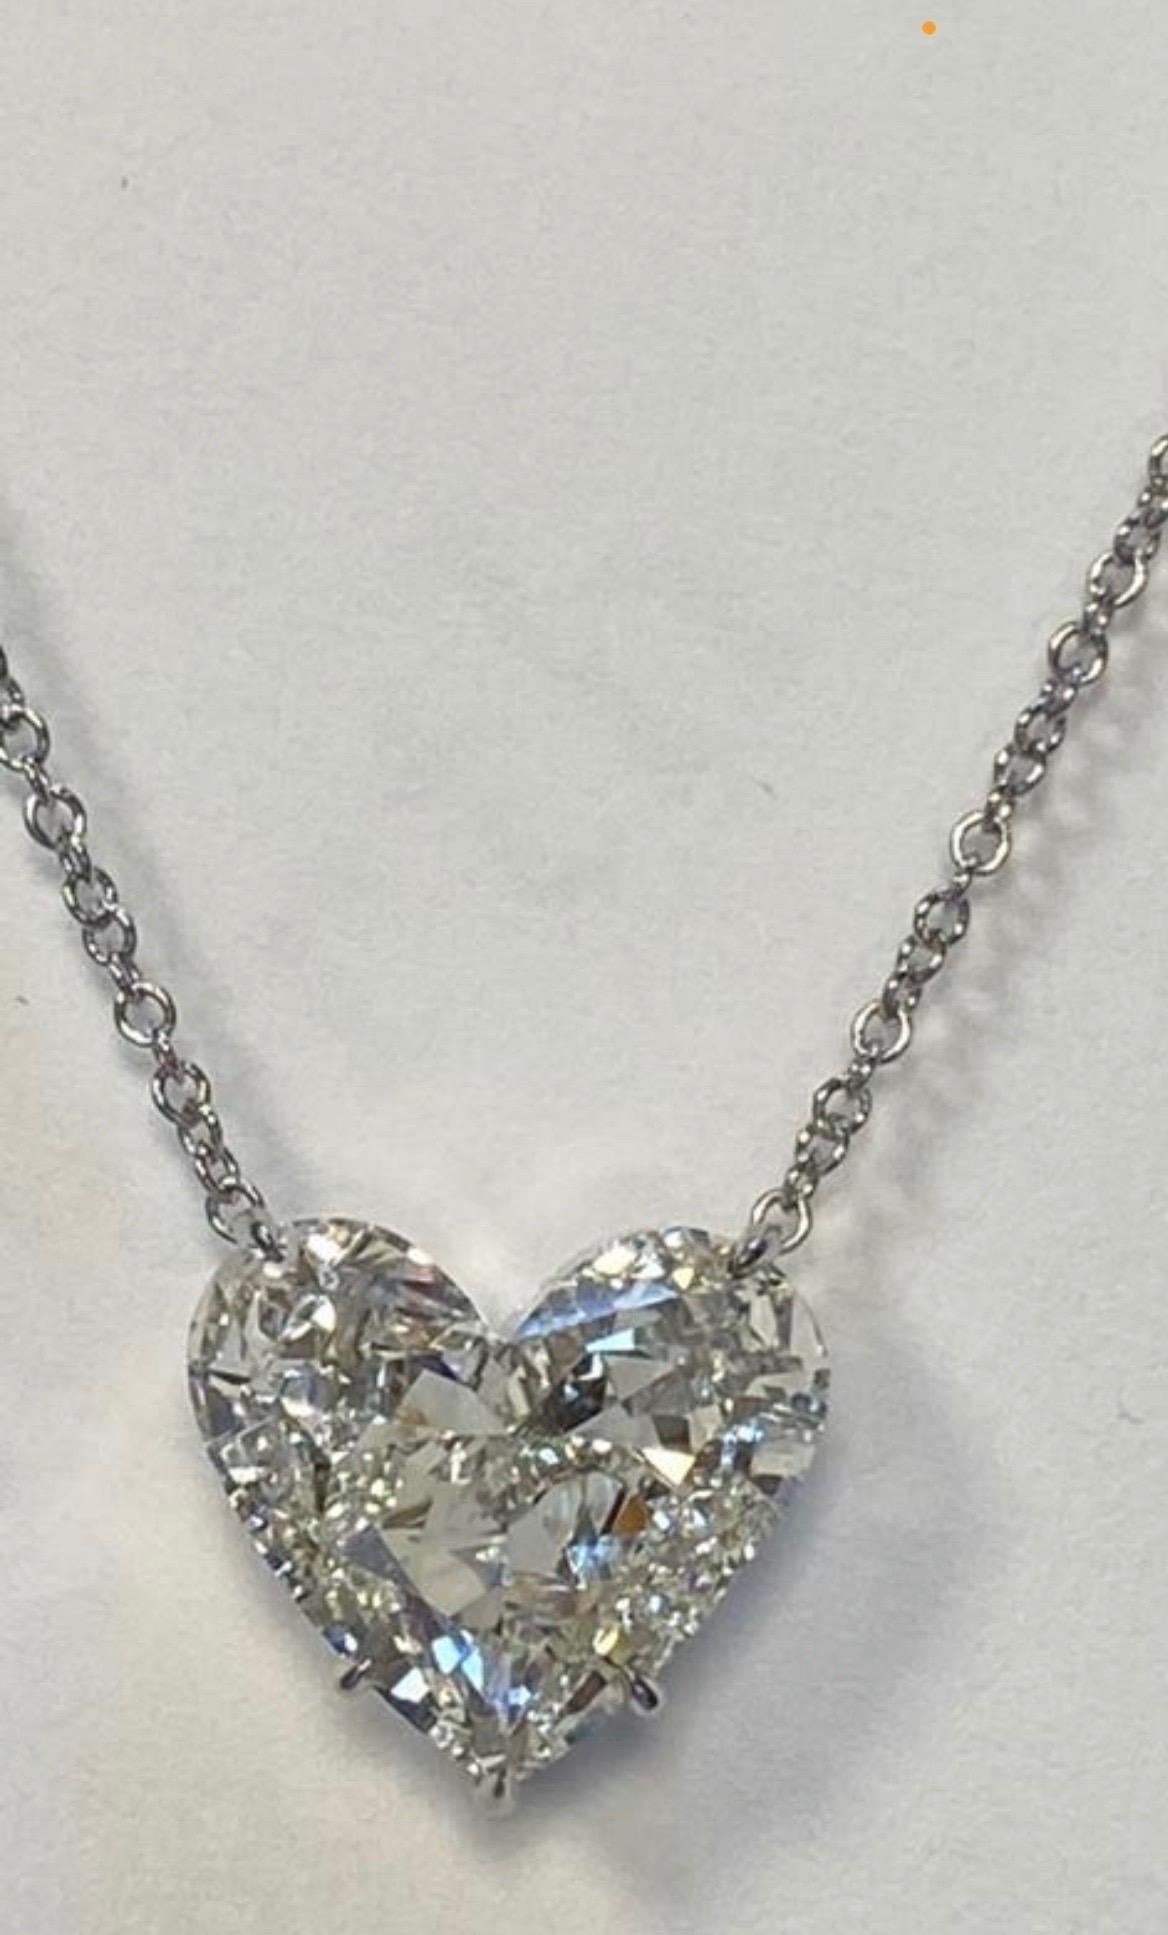 Modern Issac Nussbaum GIA Certified 10.76 Carat Heart Shape Diamond Pendant Necklace For Sale